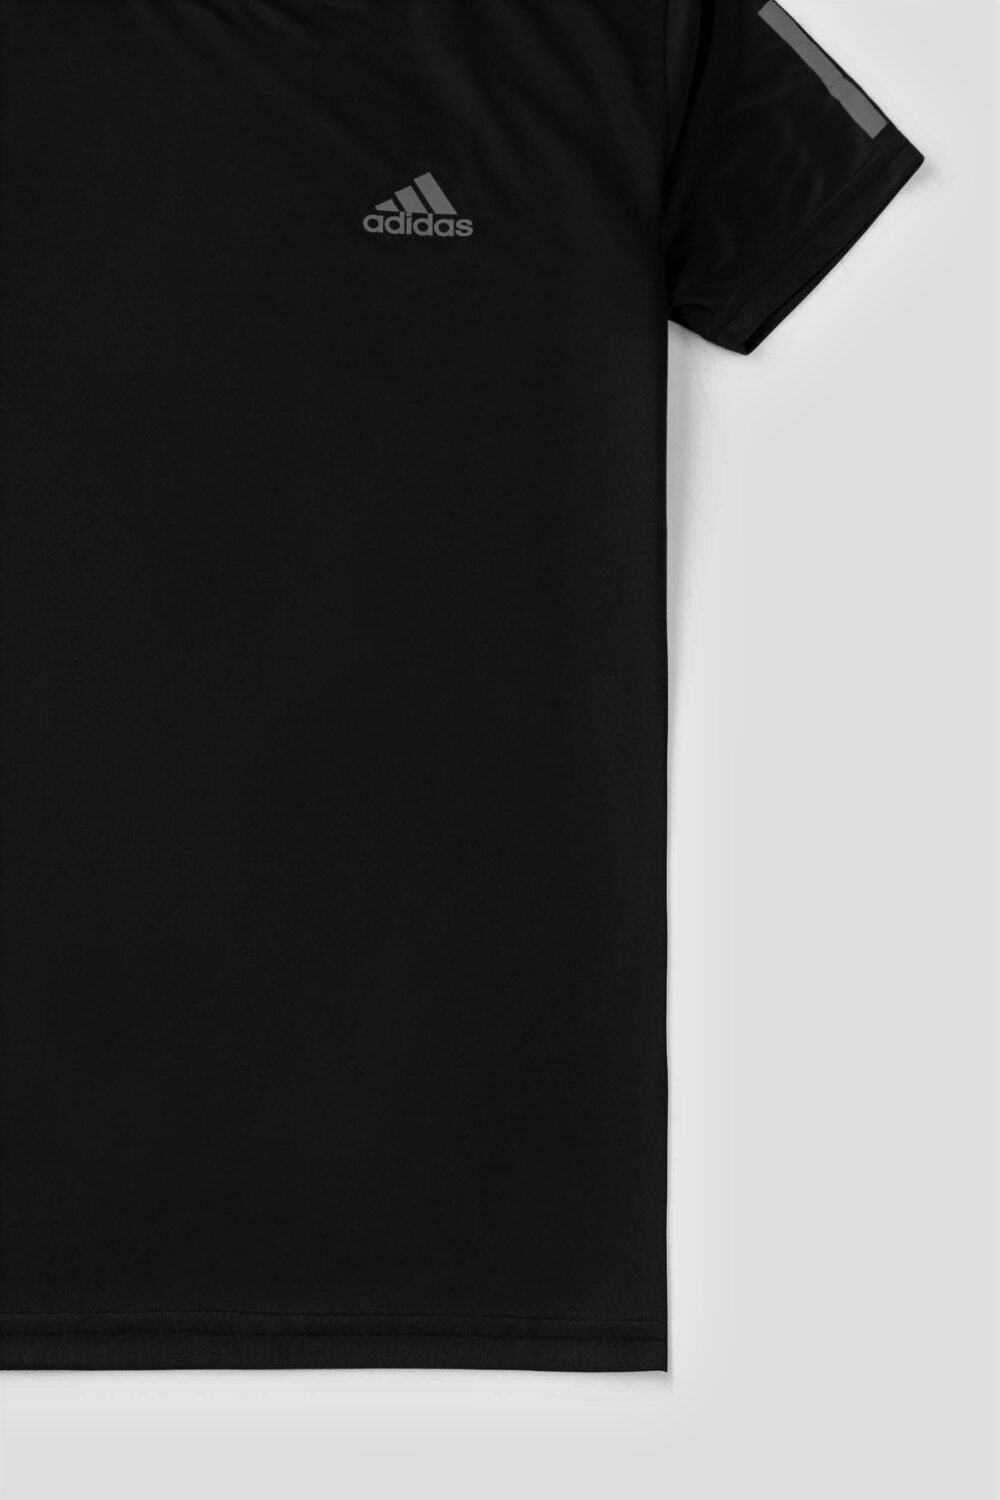 Adidas Premium Sports T Shirt – Black